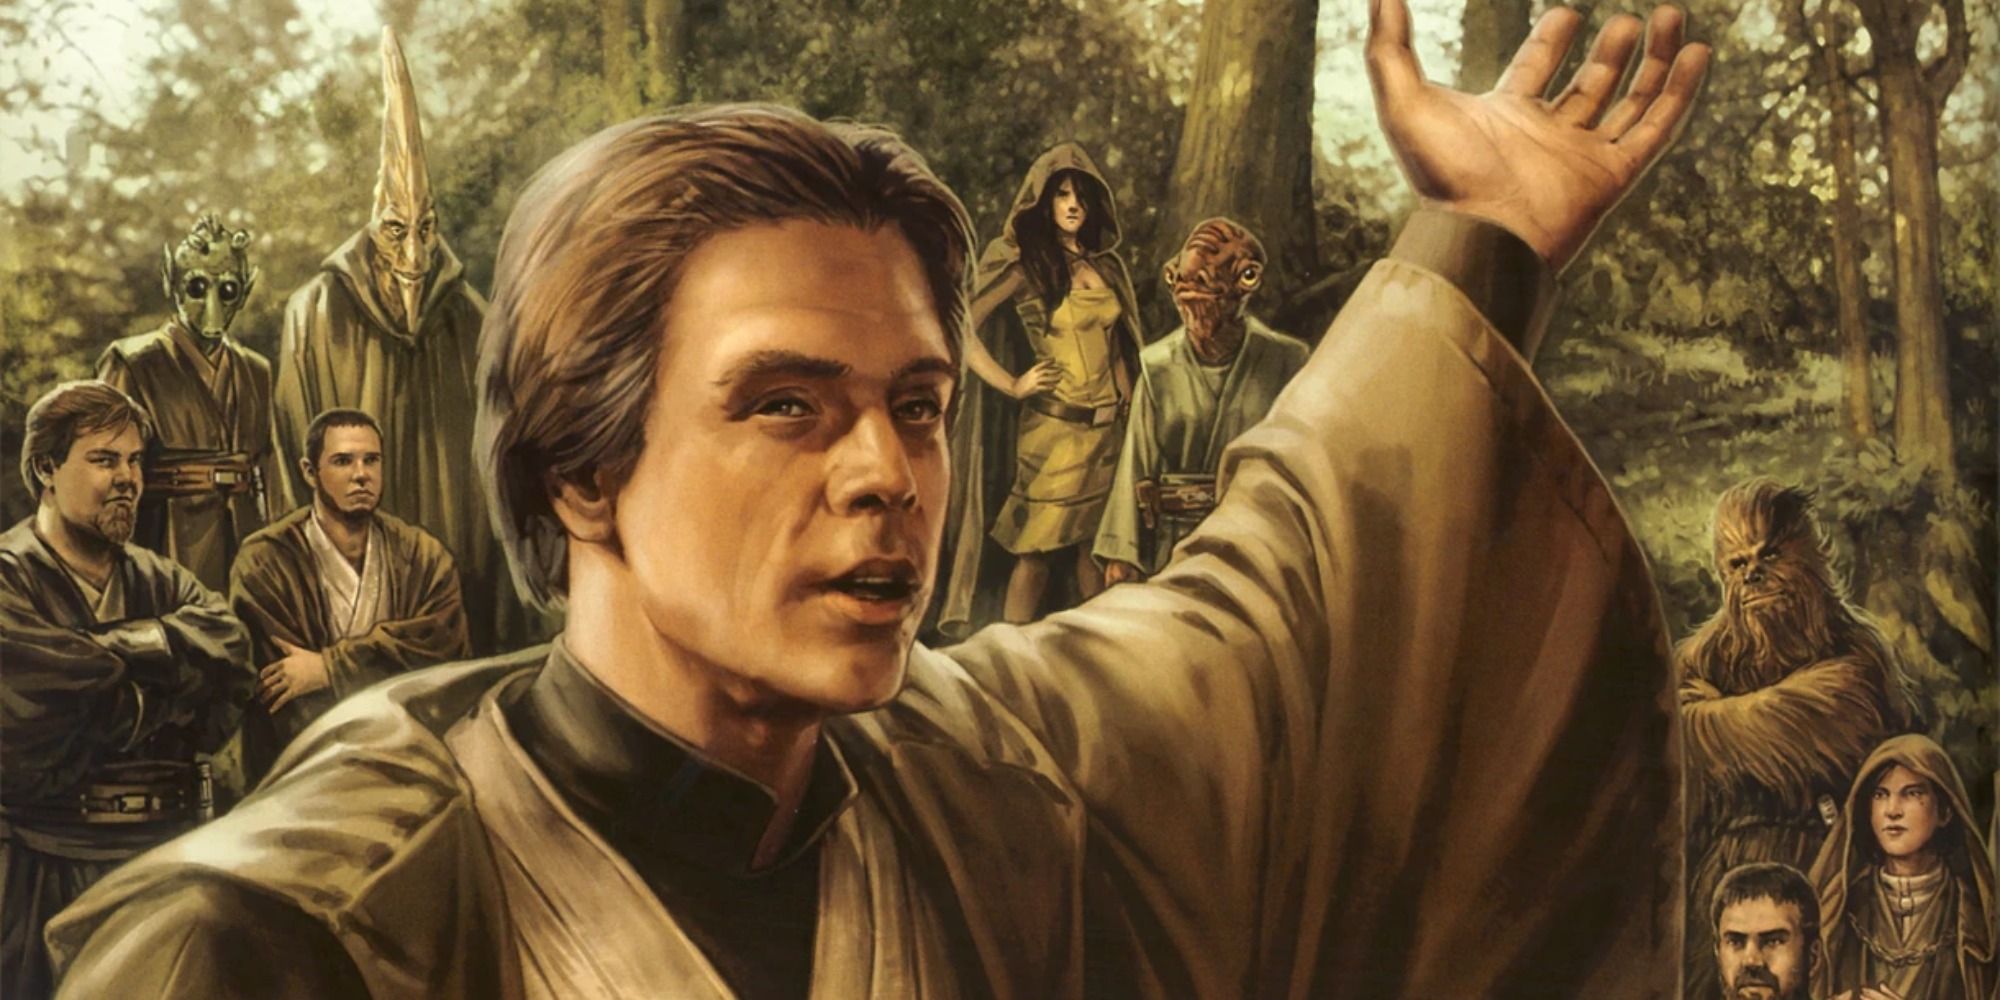 Master Luke Skywalker trains the Jedi Knights in the Star Wars saga.